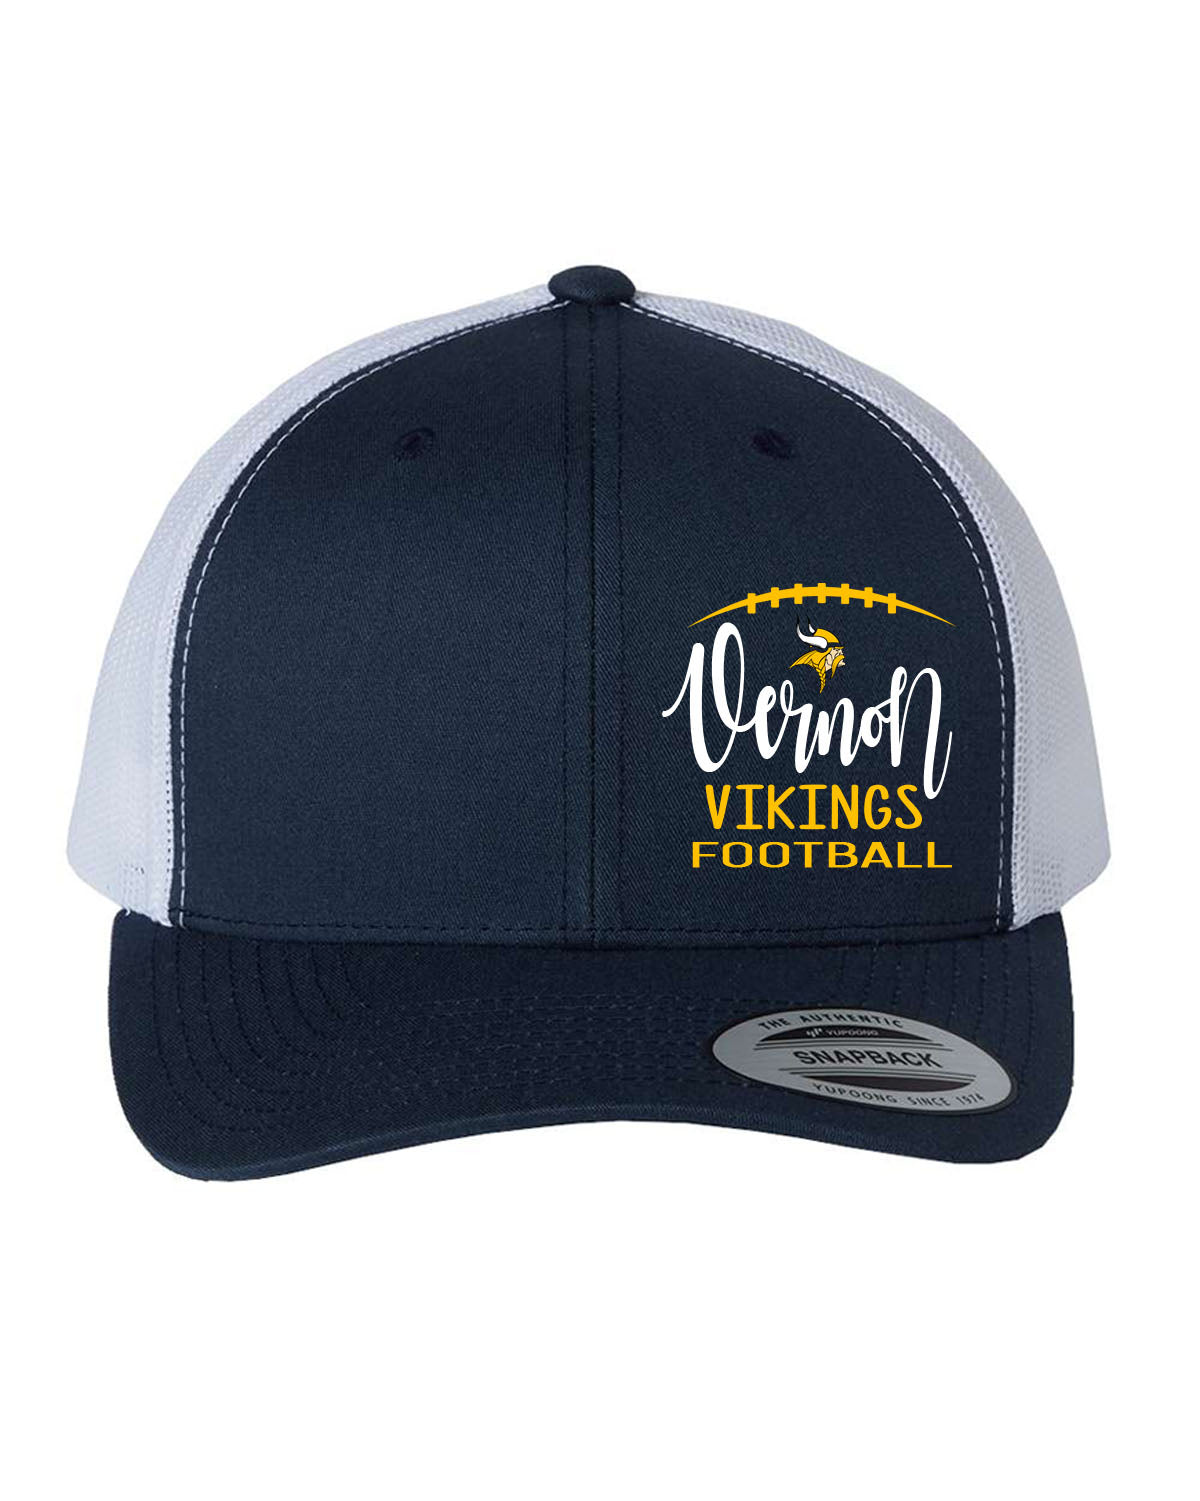 Vernon Football Design 4 Trucker Hat